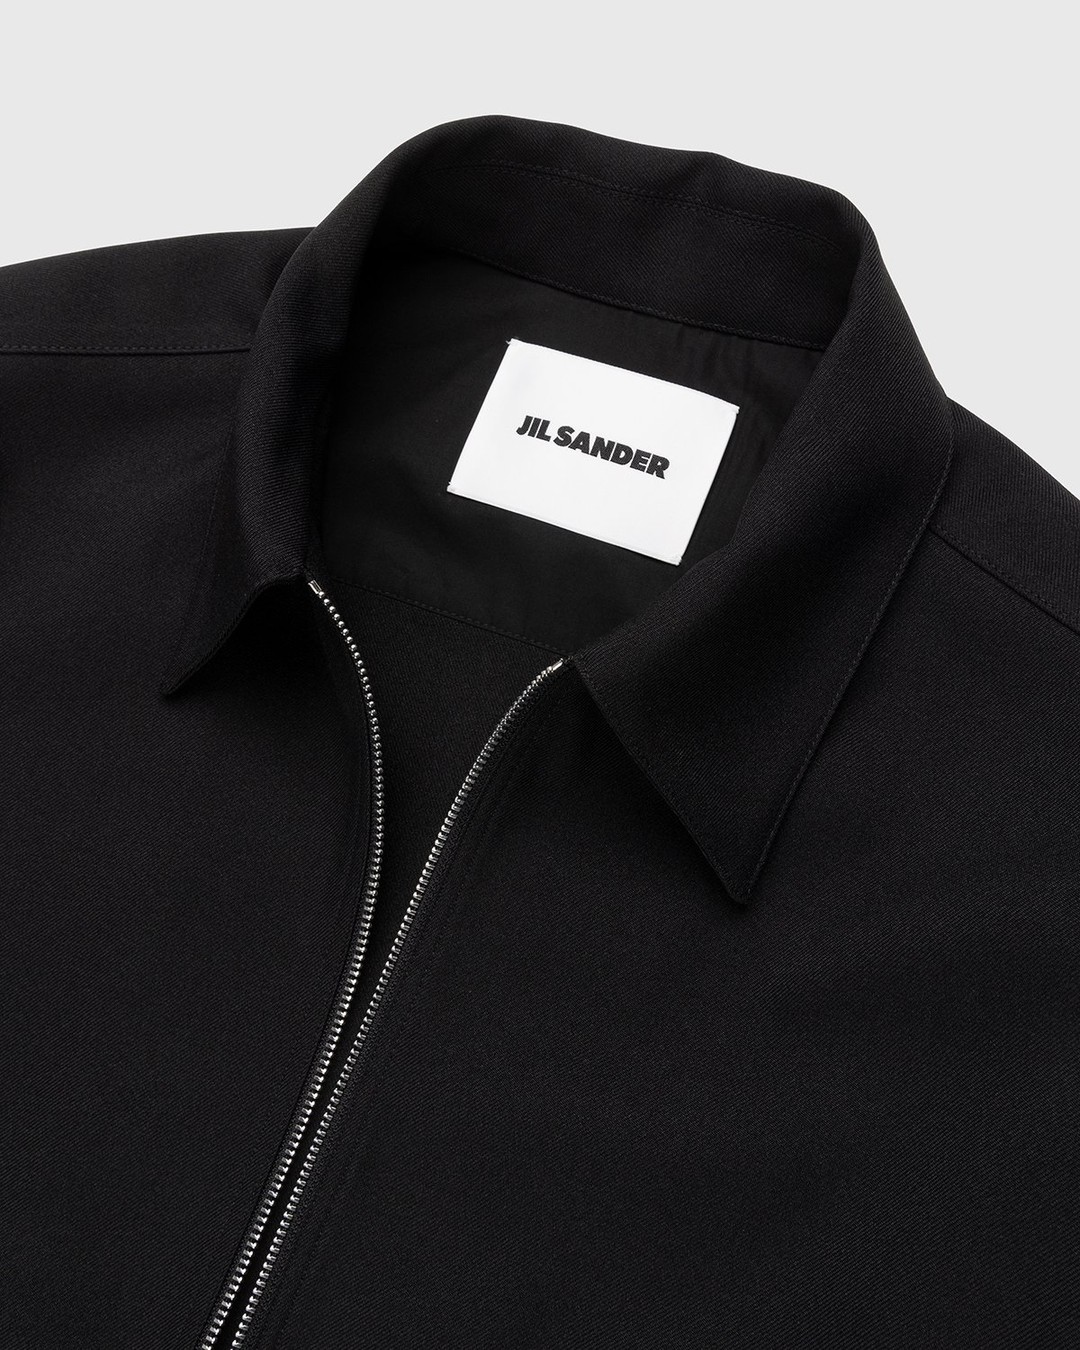 Jil Sander – Full Zip Shirt Black - Shirts - Black - Image 5